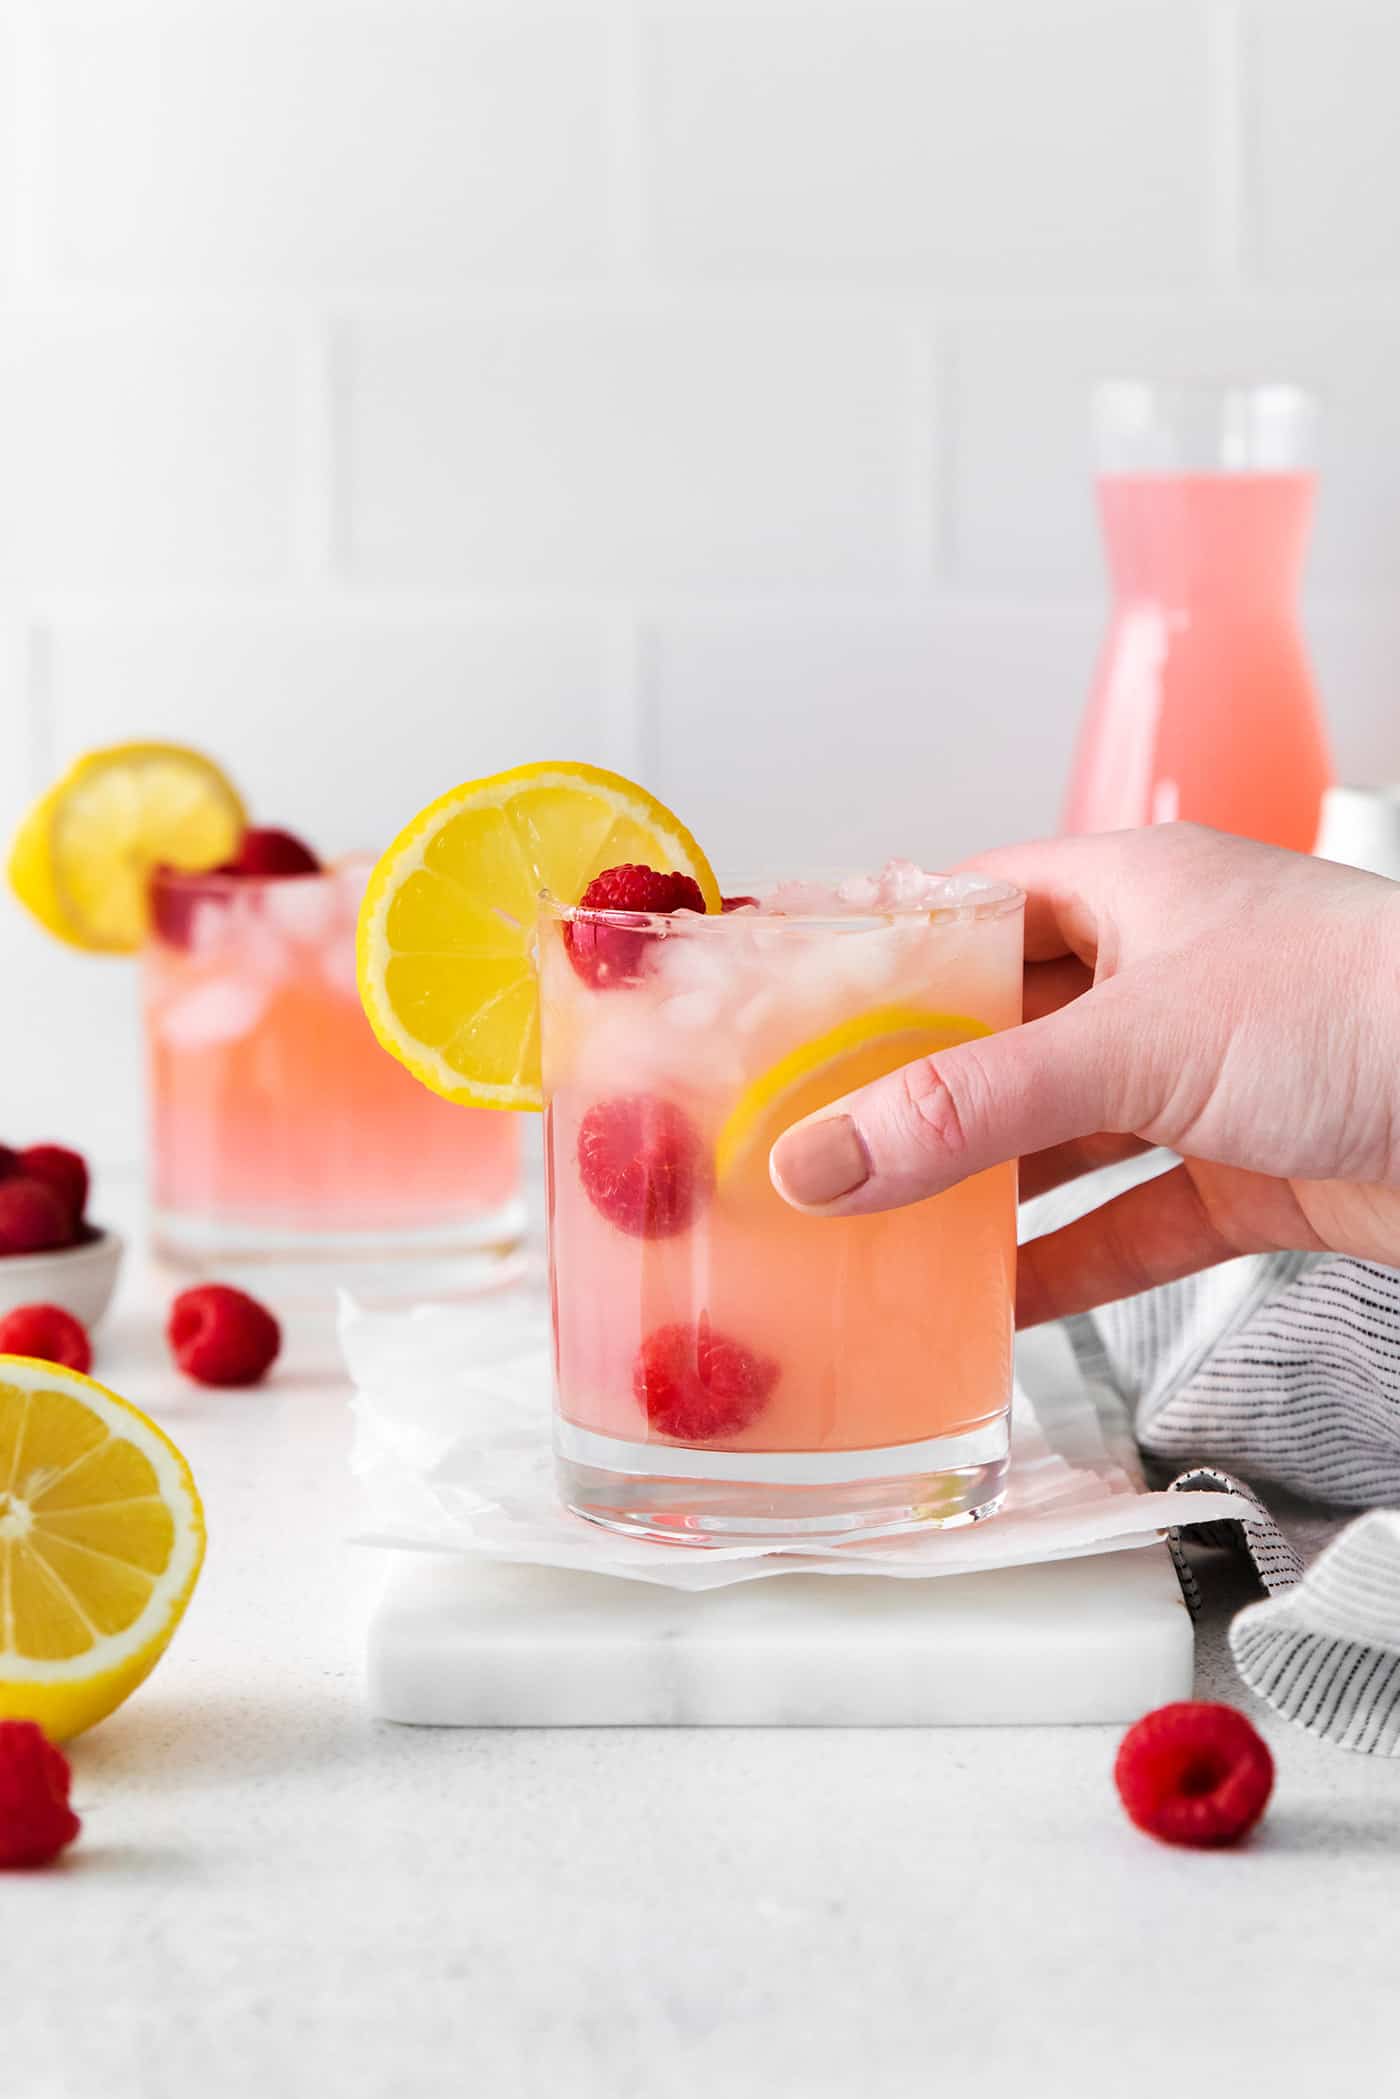 A hand holding a pink senorita cocktail